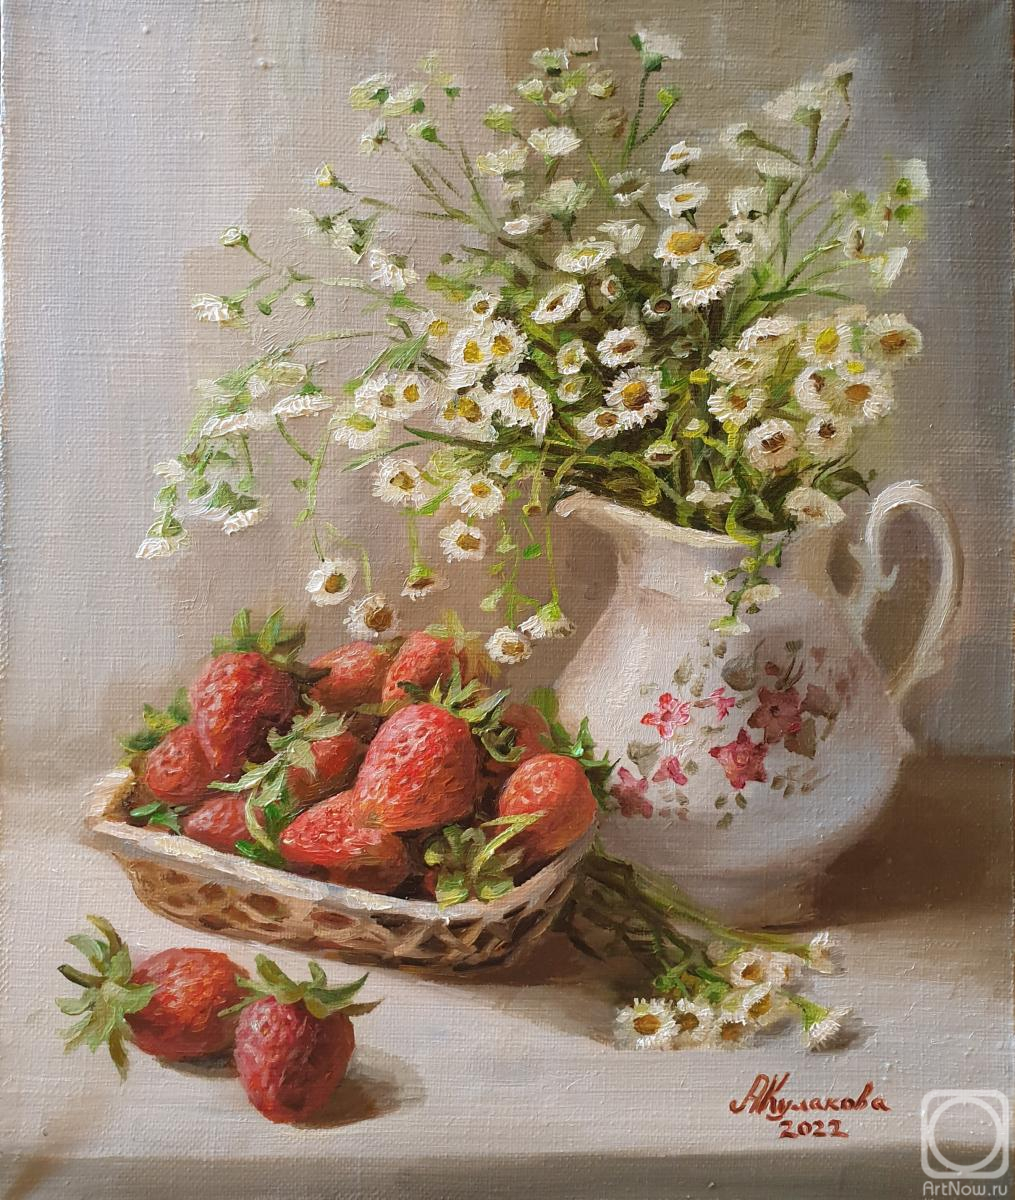 Kulakova Aleksandra. Stillife with strawberry